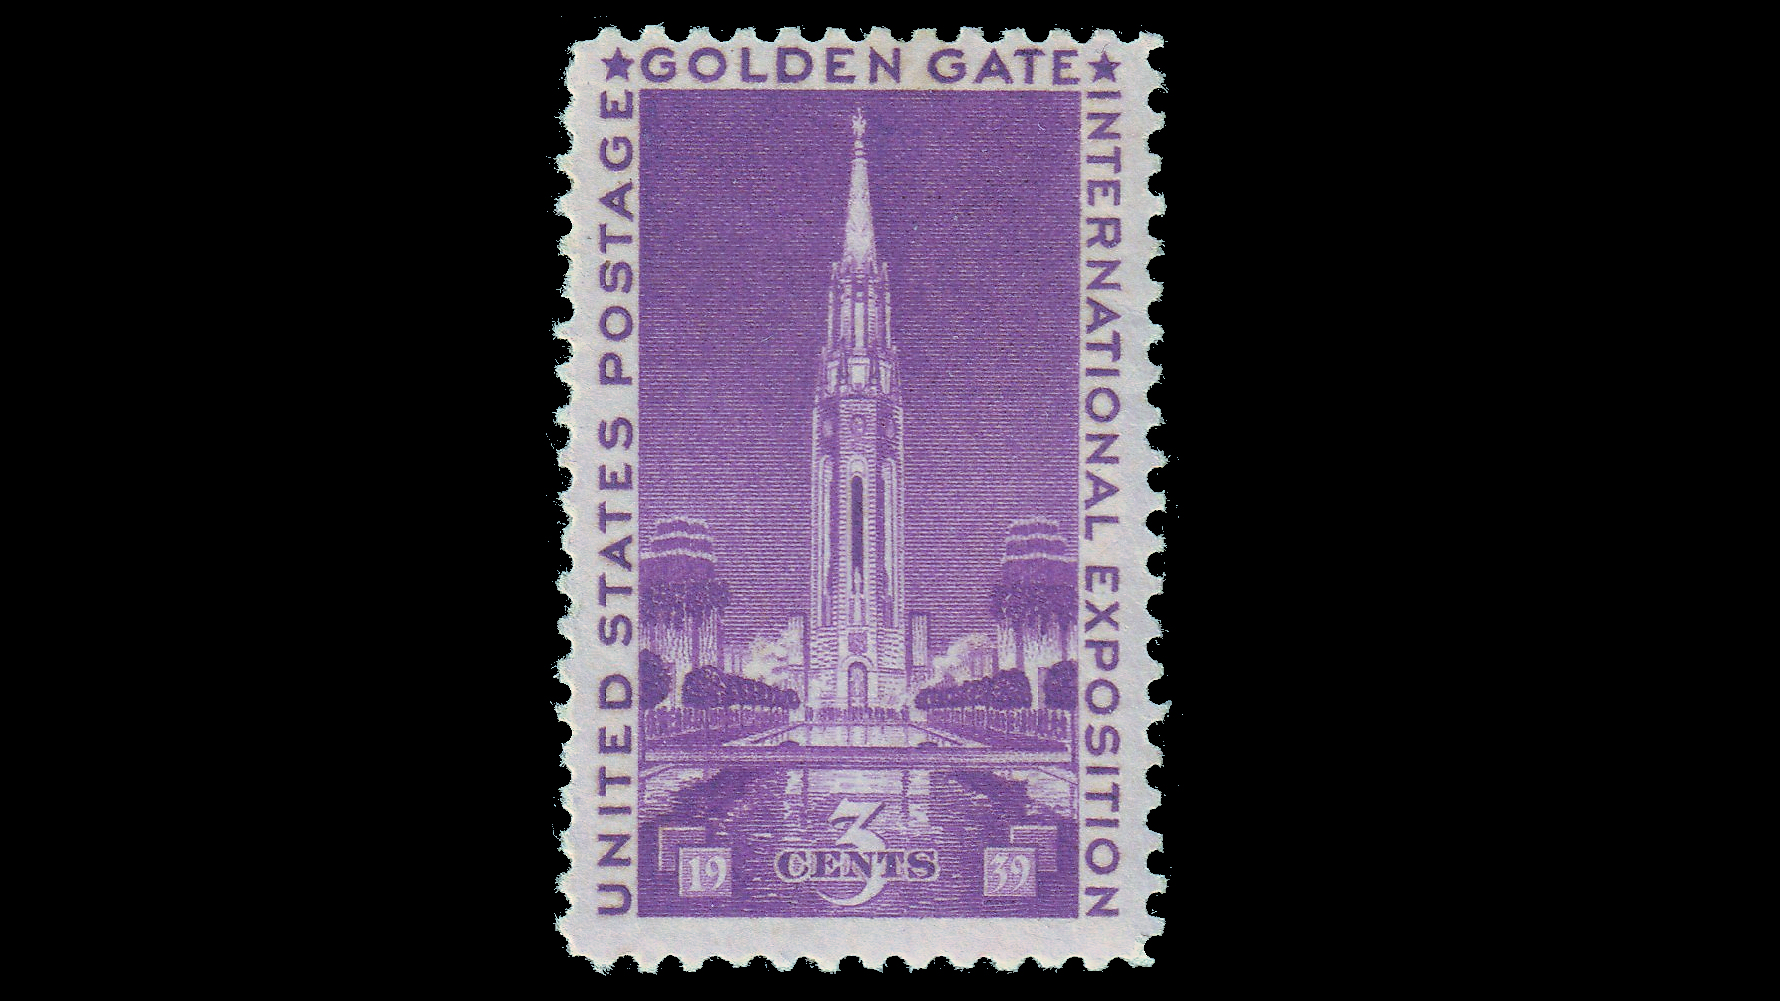 1939 Golden Gate Expo